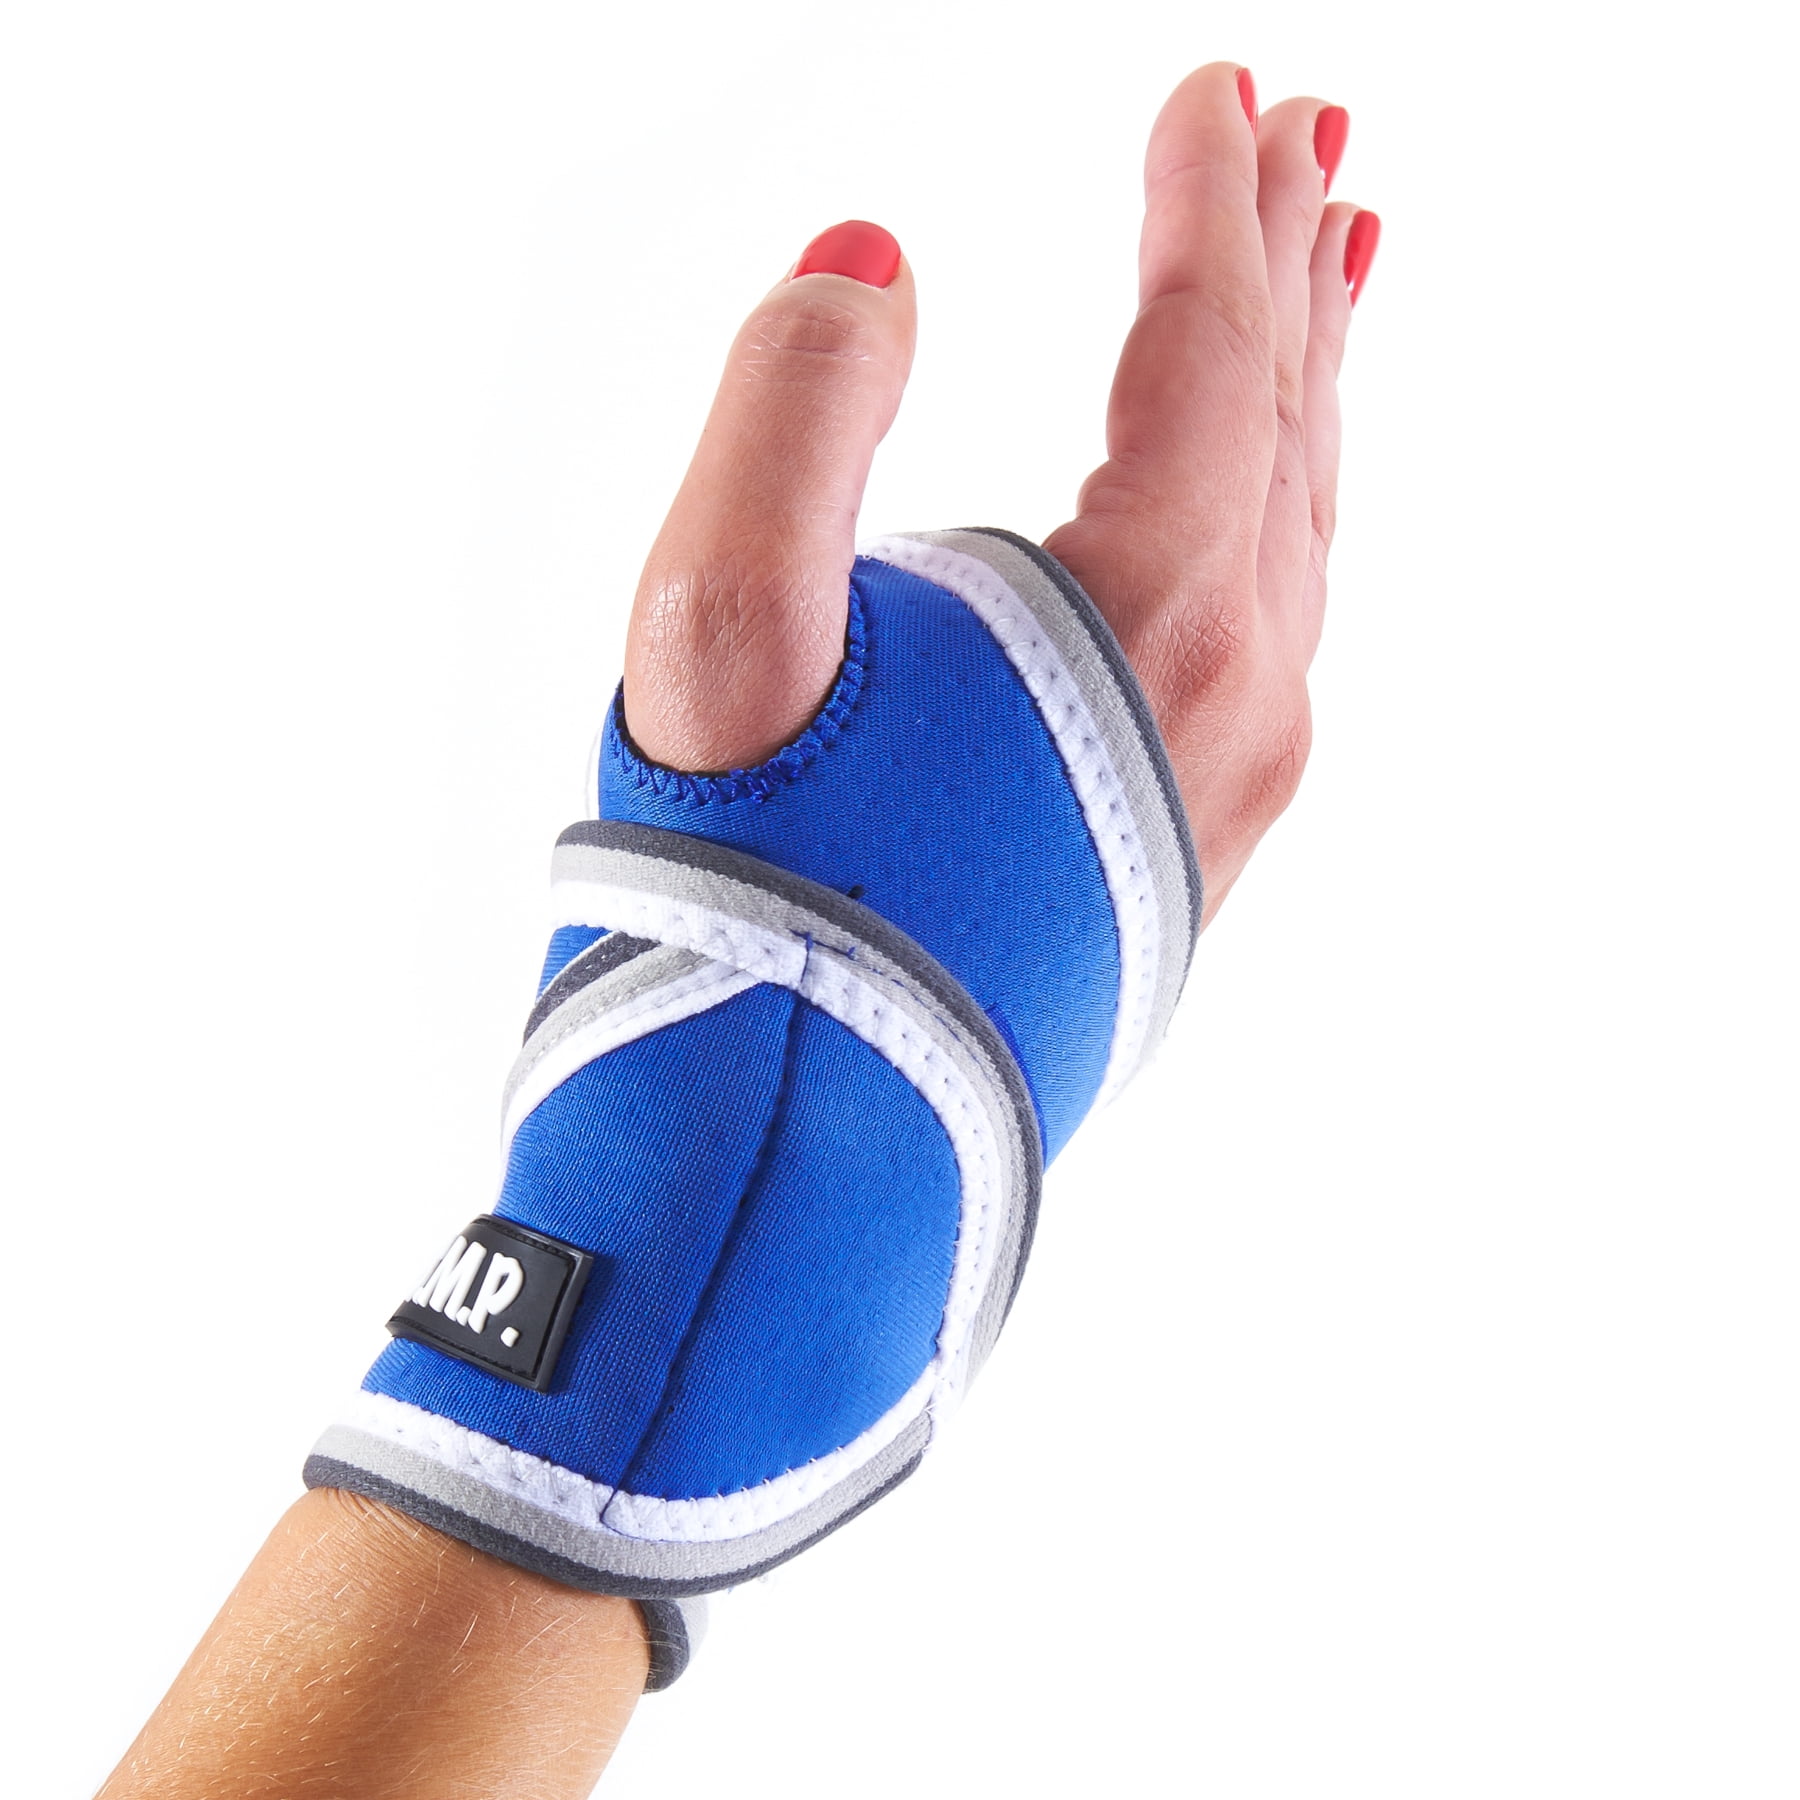 Futuro Wrist Brace (Large) –  (by 99 Pharmacy)